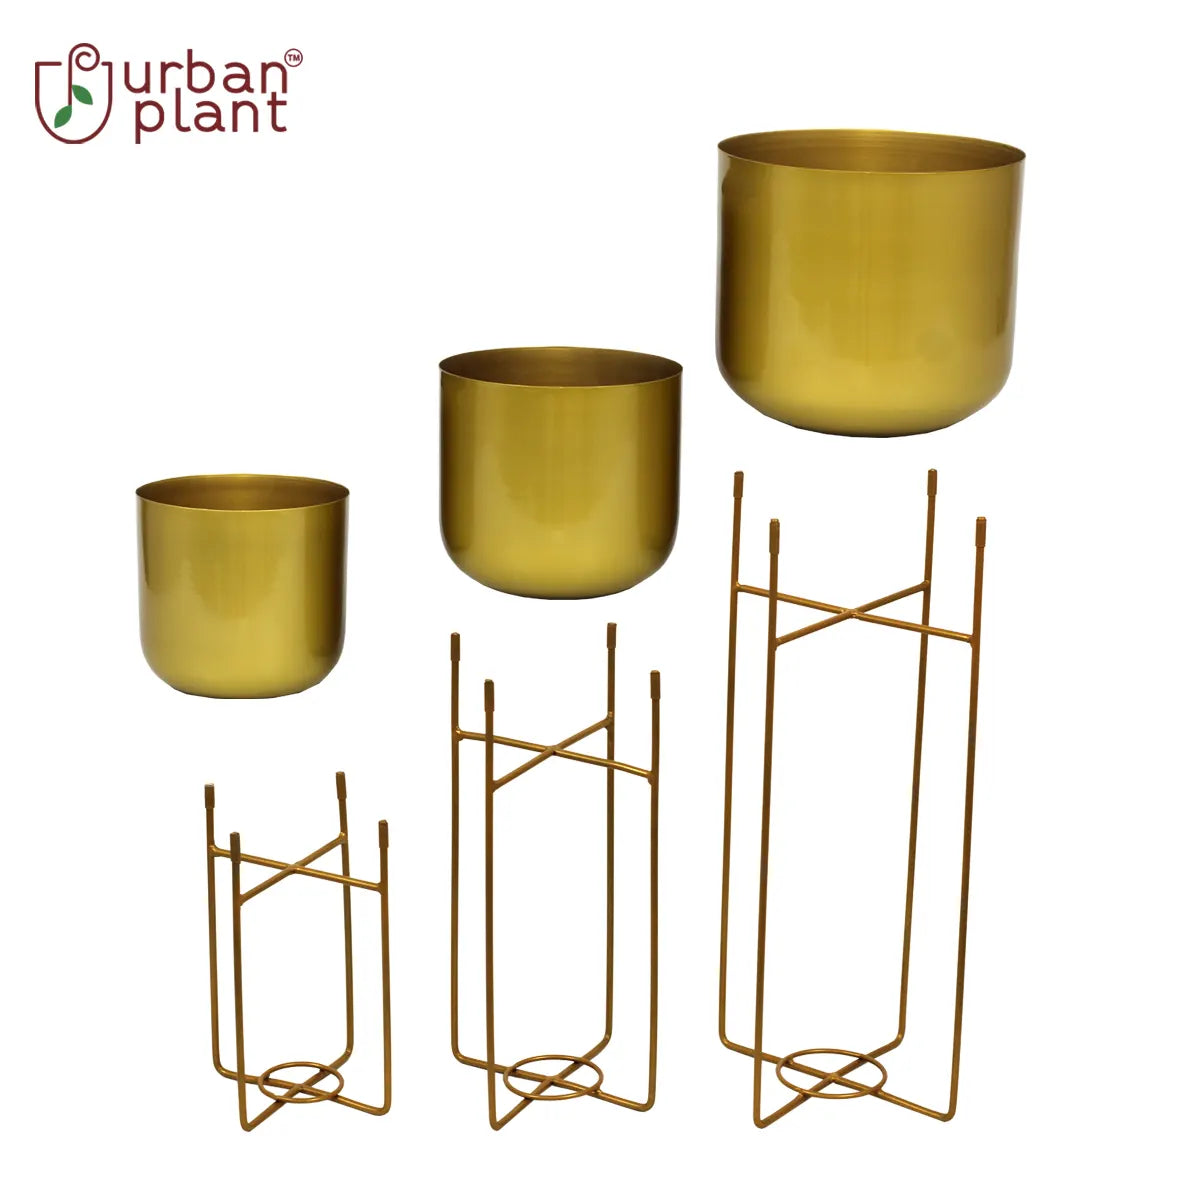 Indoor Golden Metal Planters with Stand (Set of 3) Metal Planter Urban Plant 